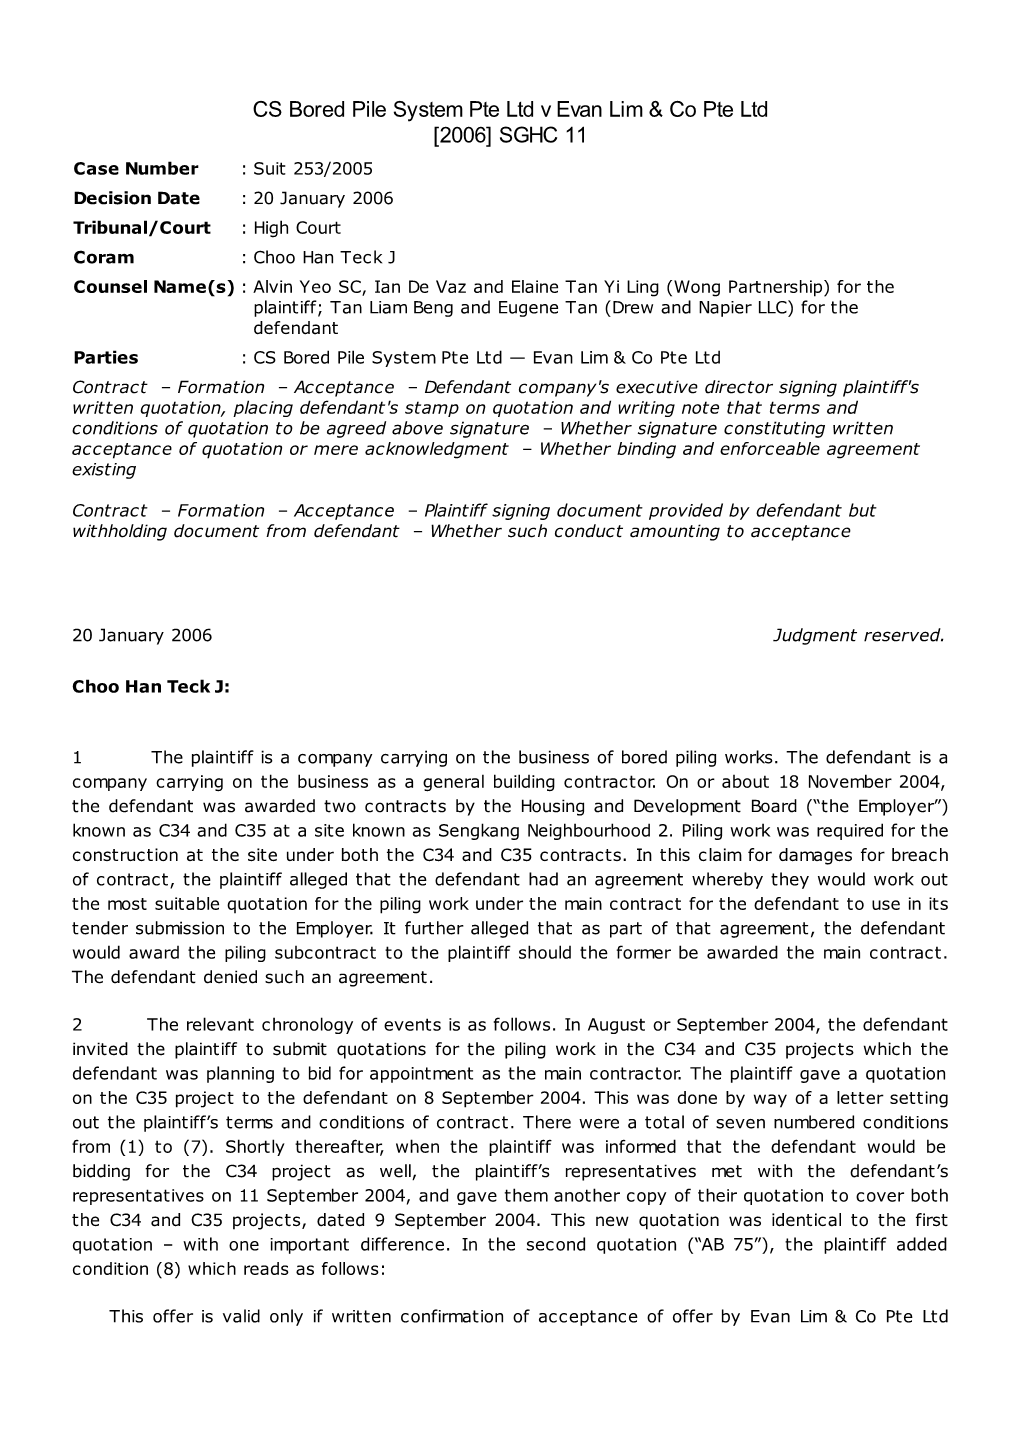 CS Bored Pile System Pte Ltd V Evan Lim & Co Pte Ltd [2006] SGHC 11